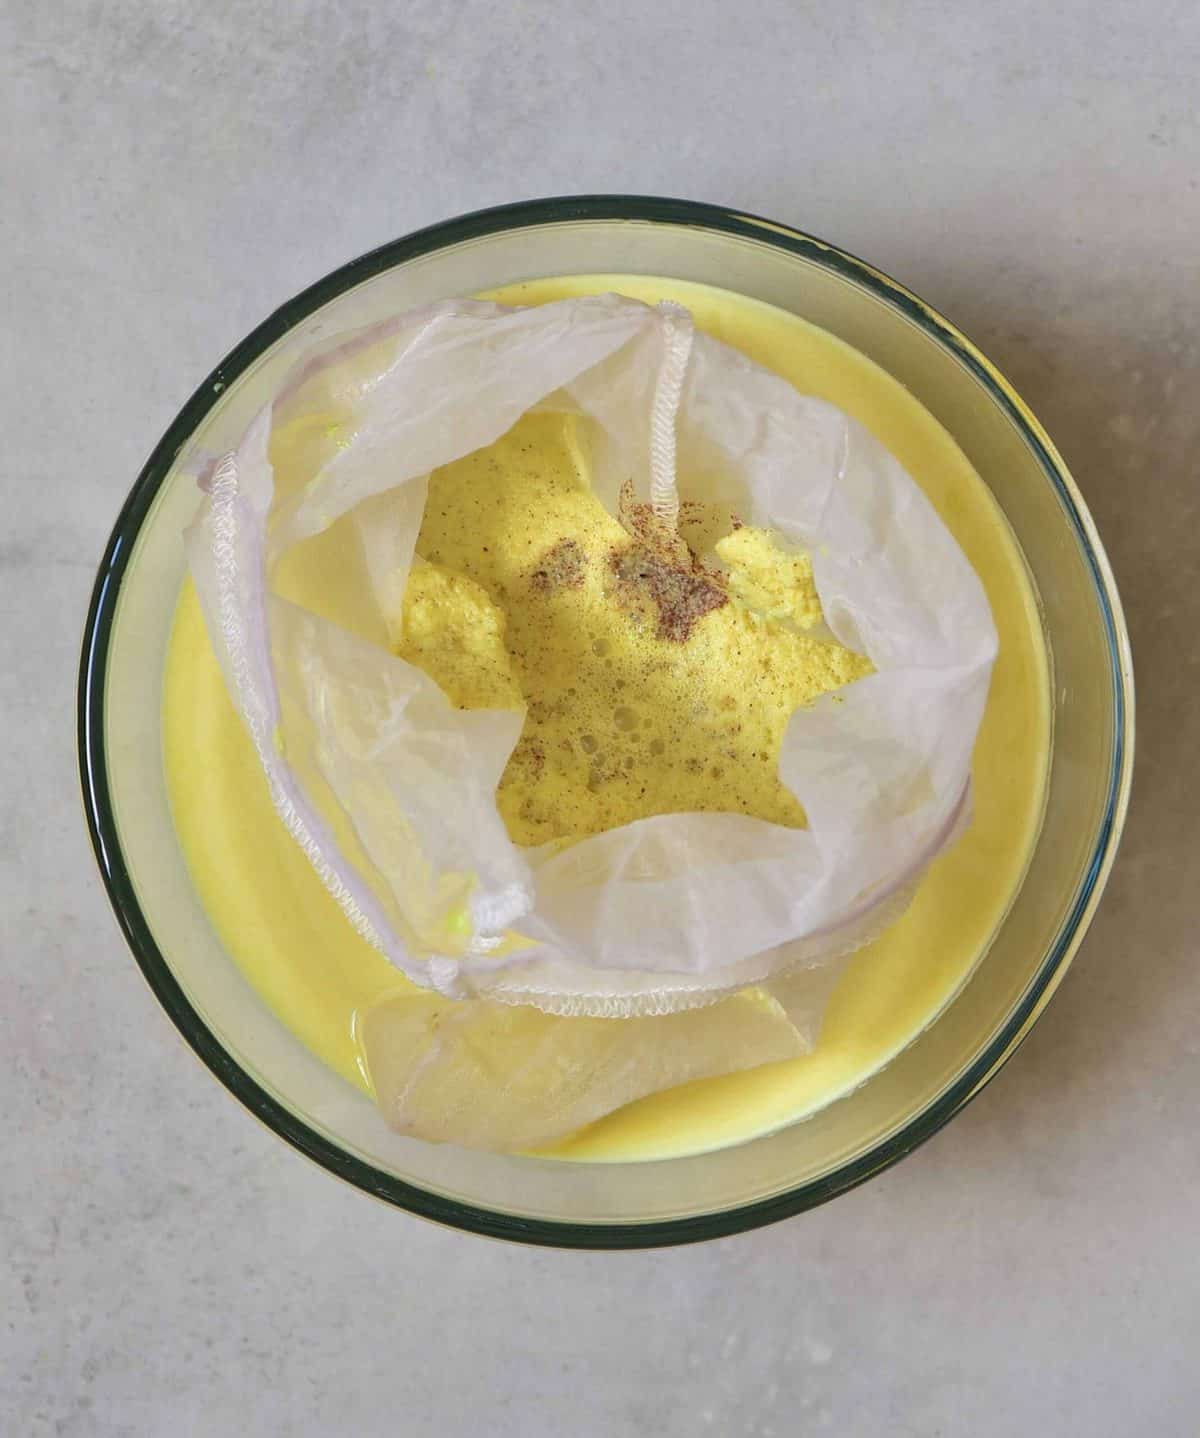 Golden milk - freshly made, poured into a nut milk bag